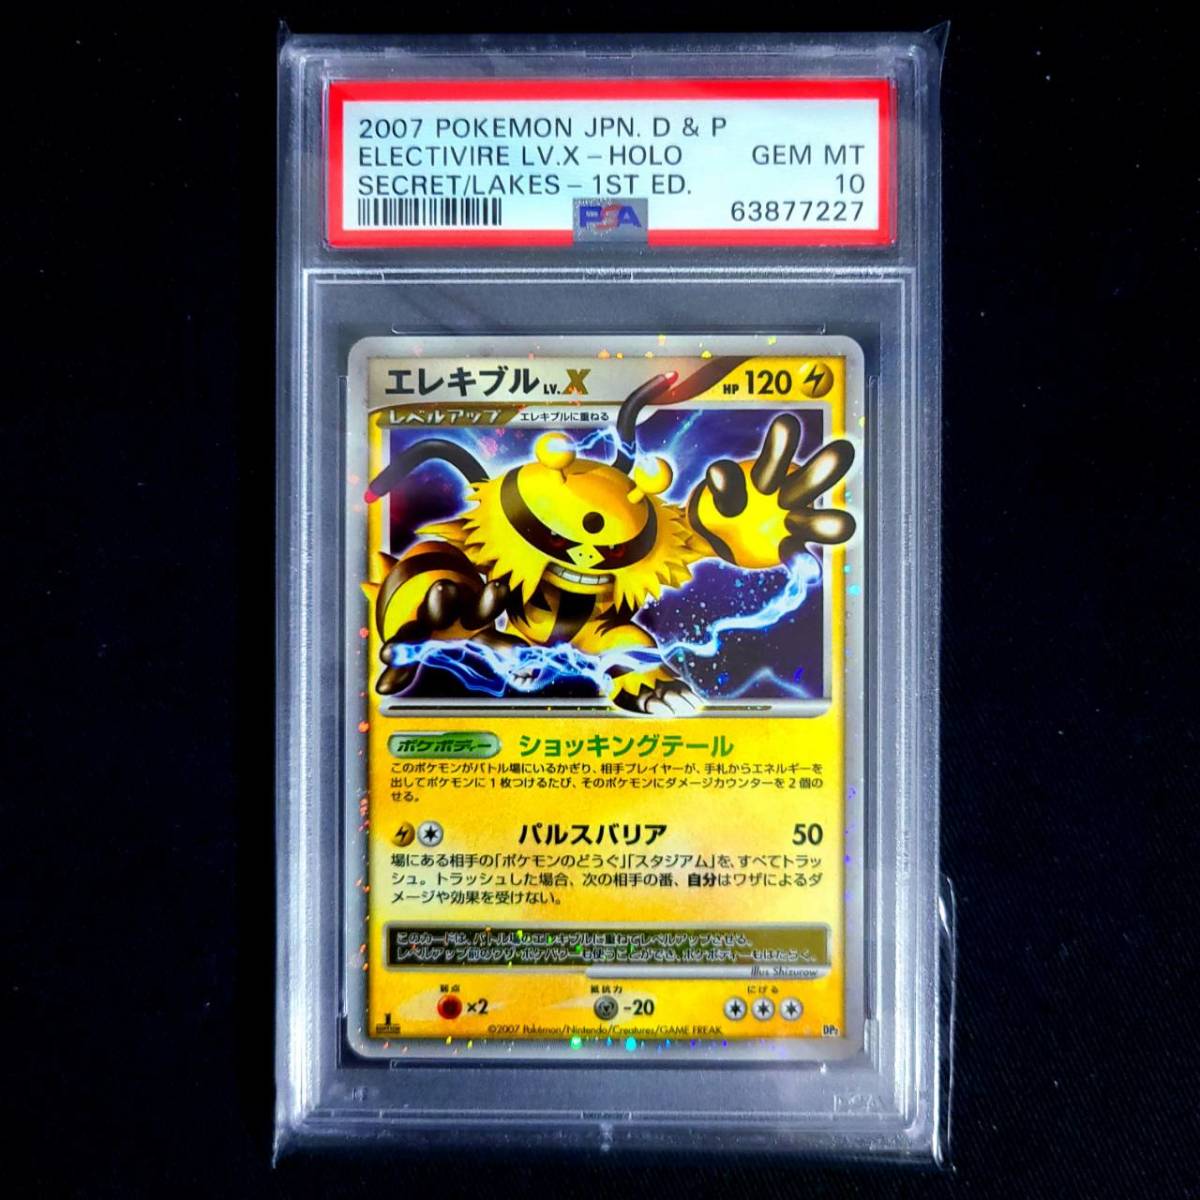 【PSA10】 2007 エレキブル LV.X DP2 SECRET/LAKES 1ST ED HOLO Pokemon card Japanese ELECTIVIRE GEM MINT